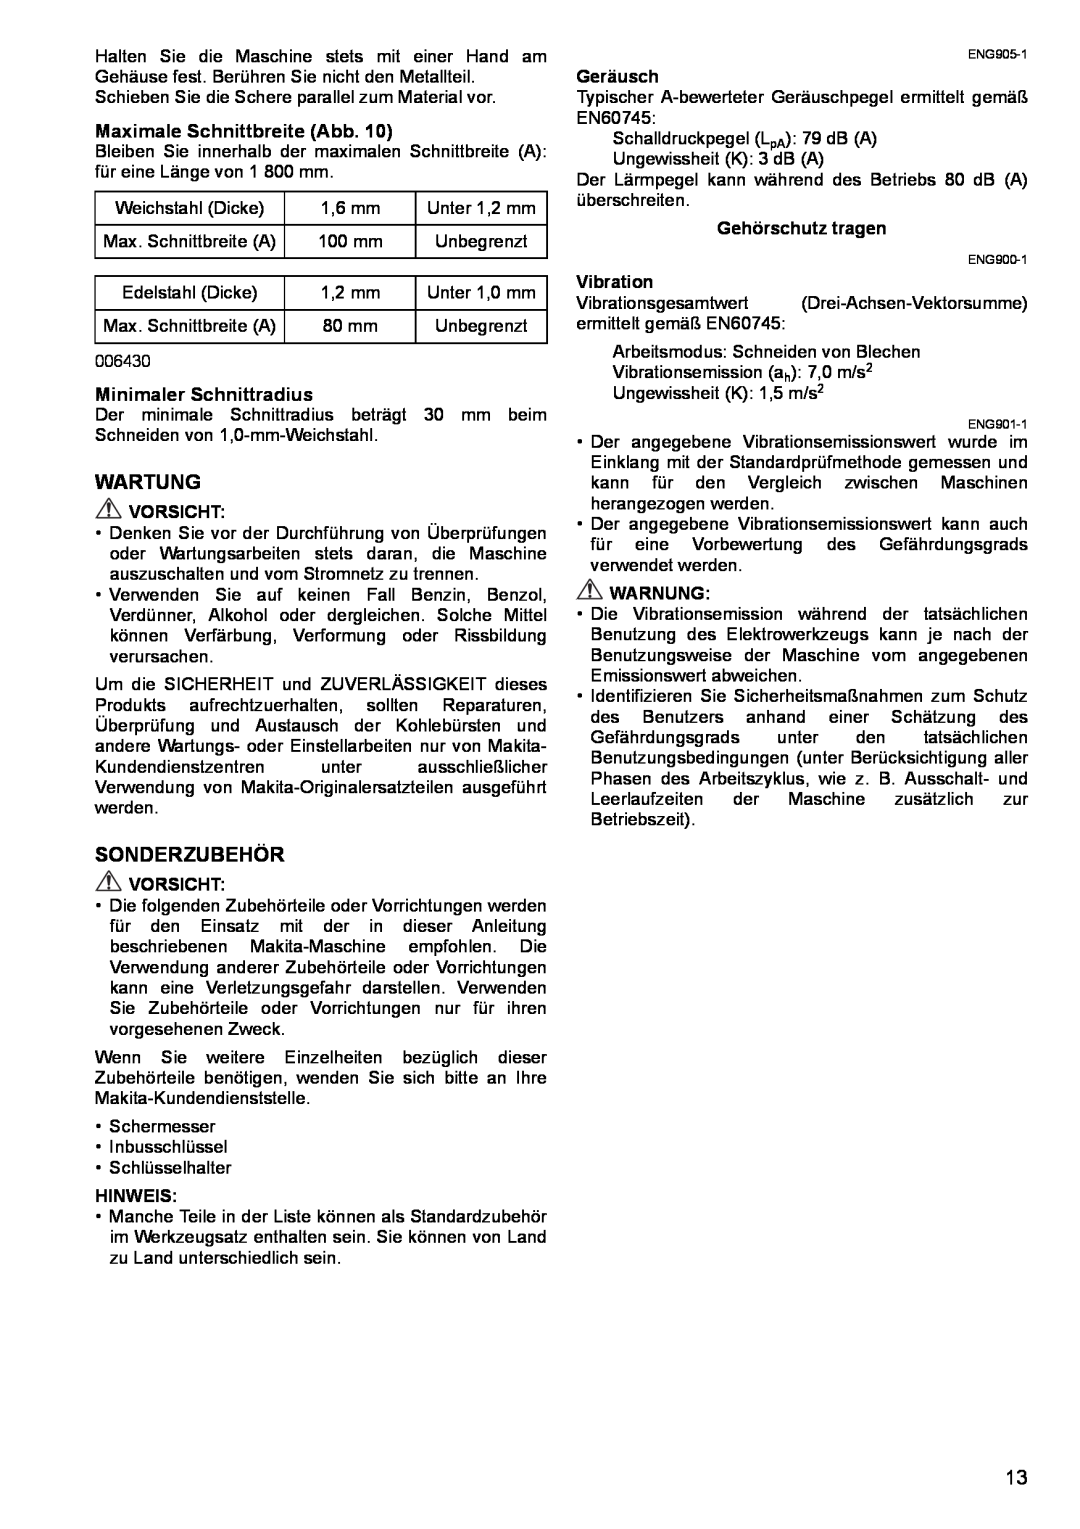 Makita JS1602 instruction manual Wartung, Sonderzubehör, Maximale Schnittbreite Abb, Minimaler Schnittradius 